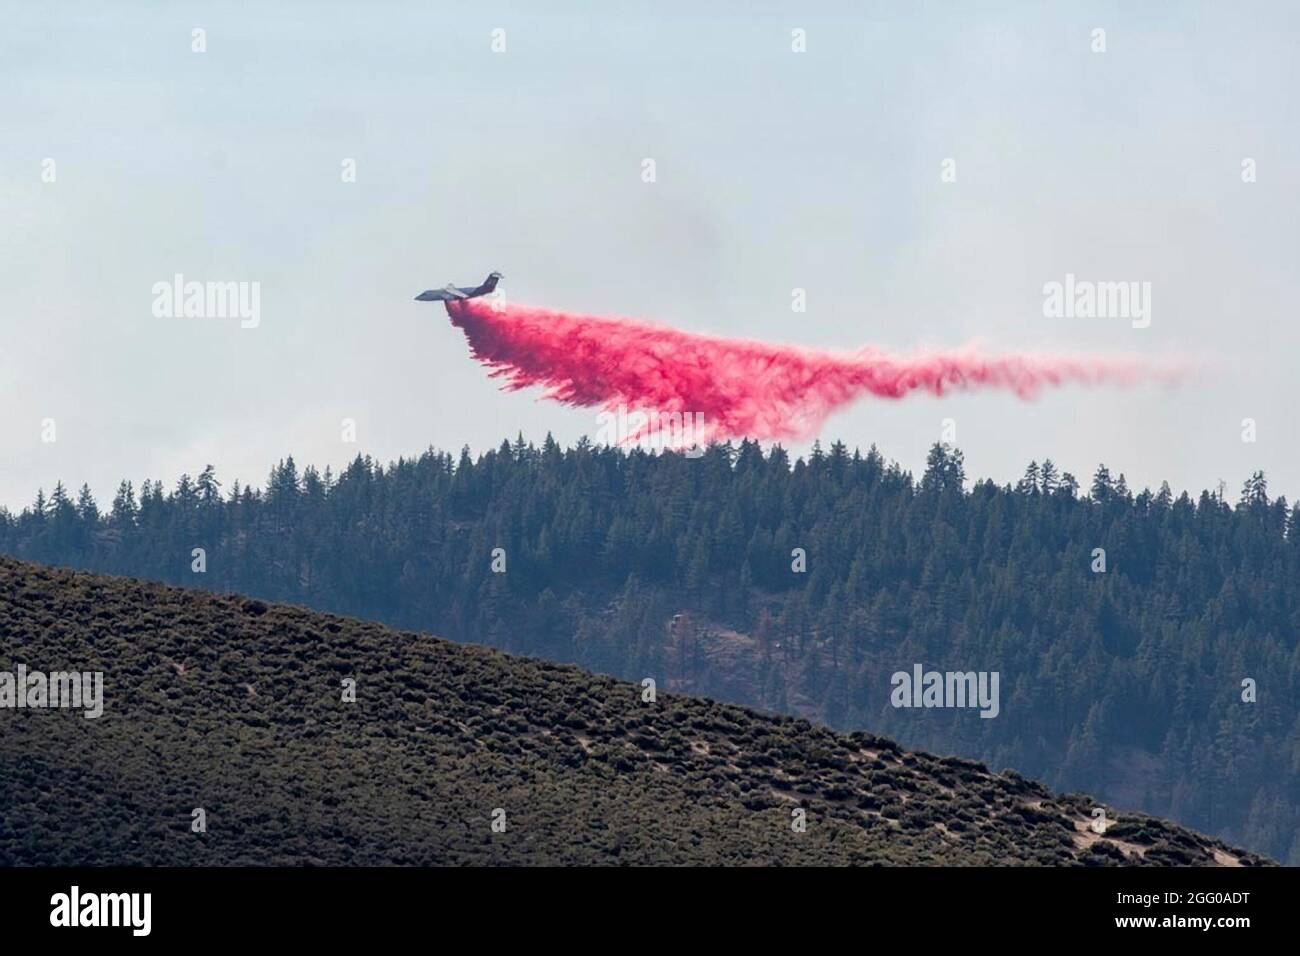 A civilian C-130 air tanker drops fire retardant on the Beckwourth Complex Fire July 9, 2021 near Frenchman Lake, California. Stock Photo